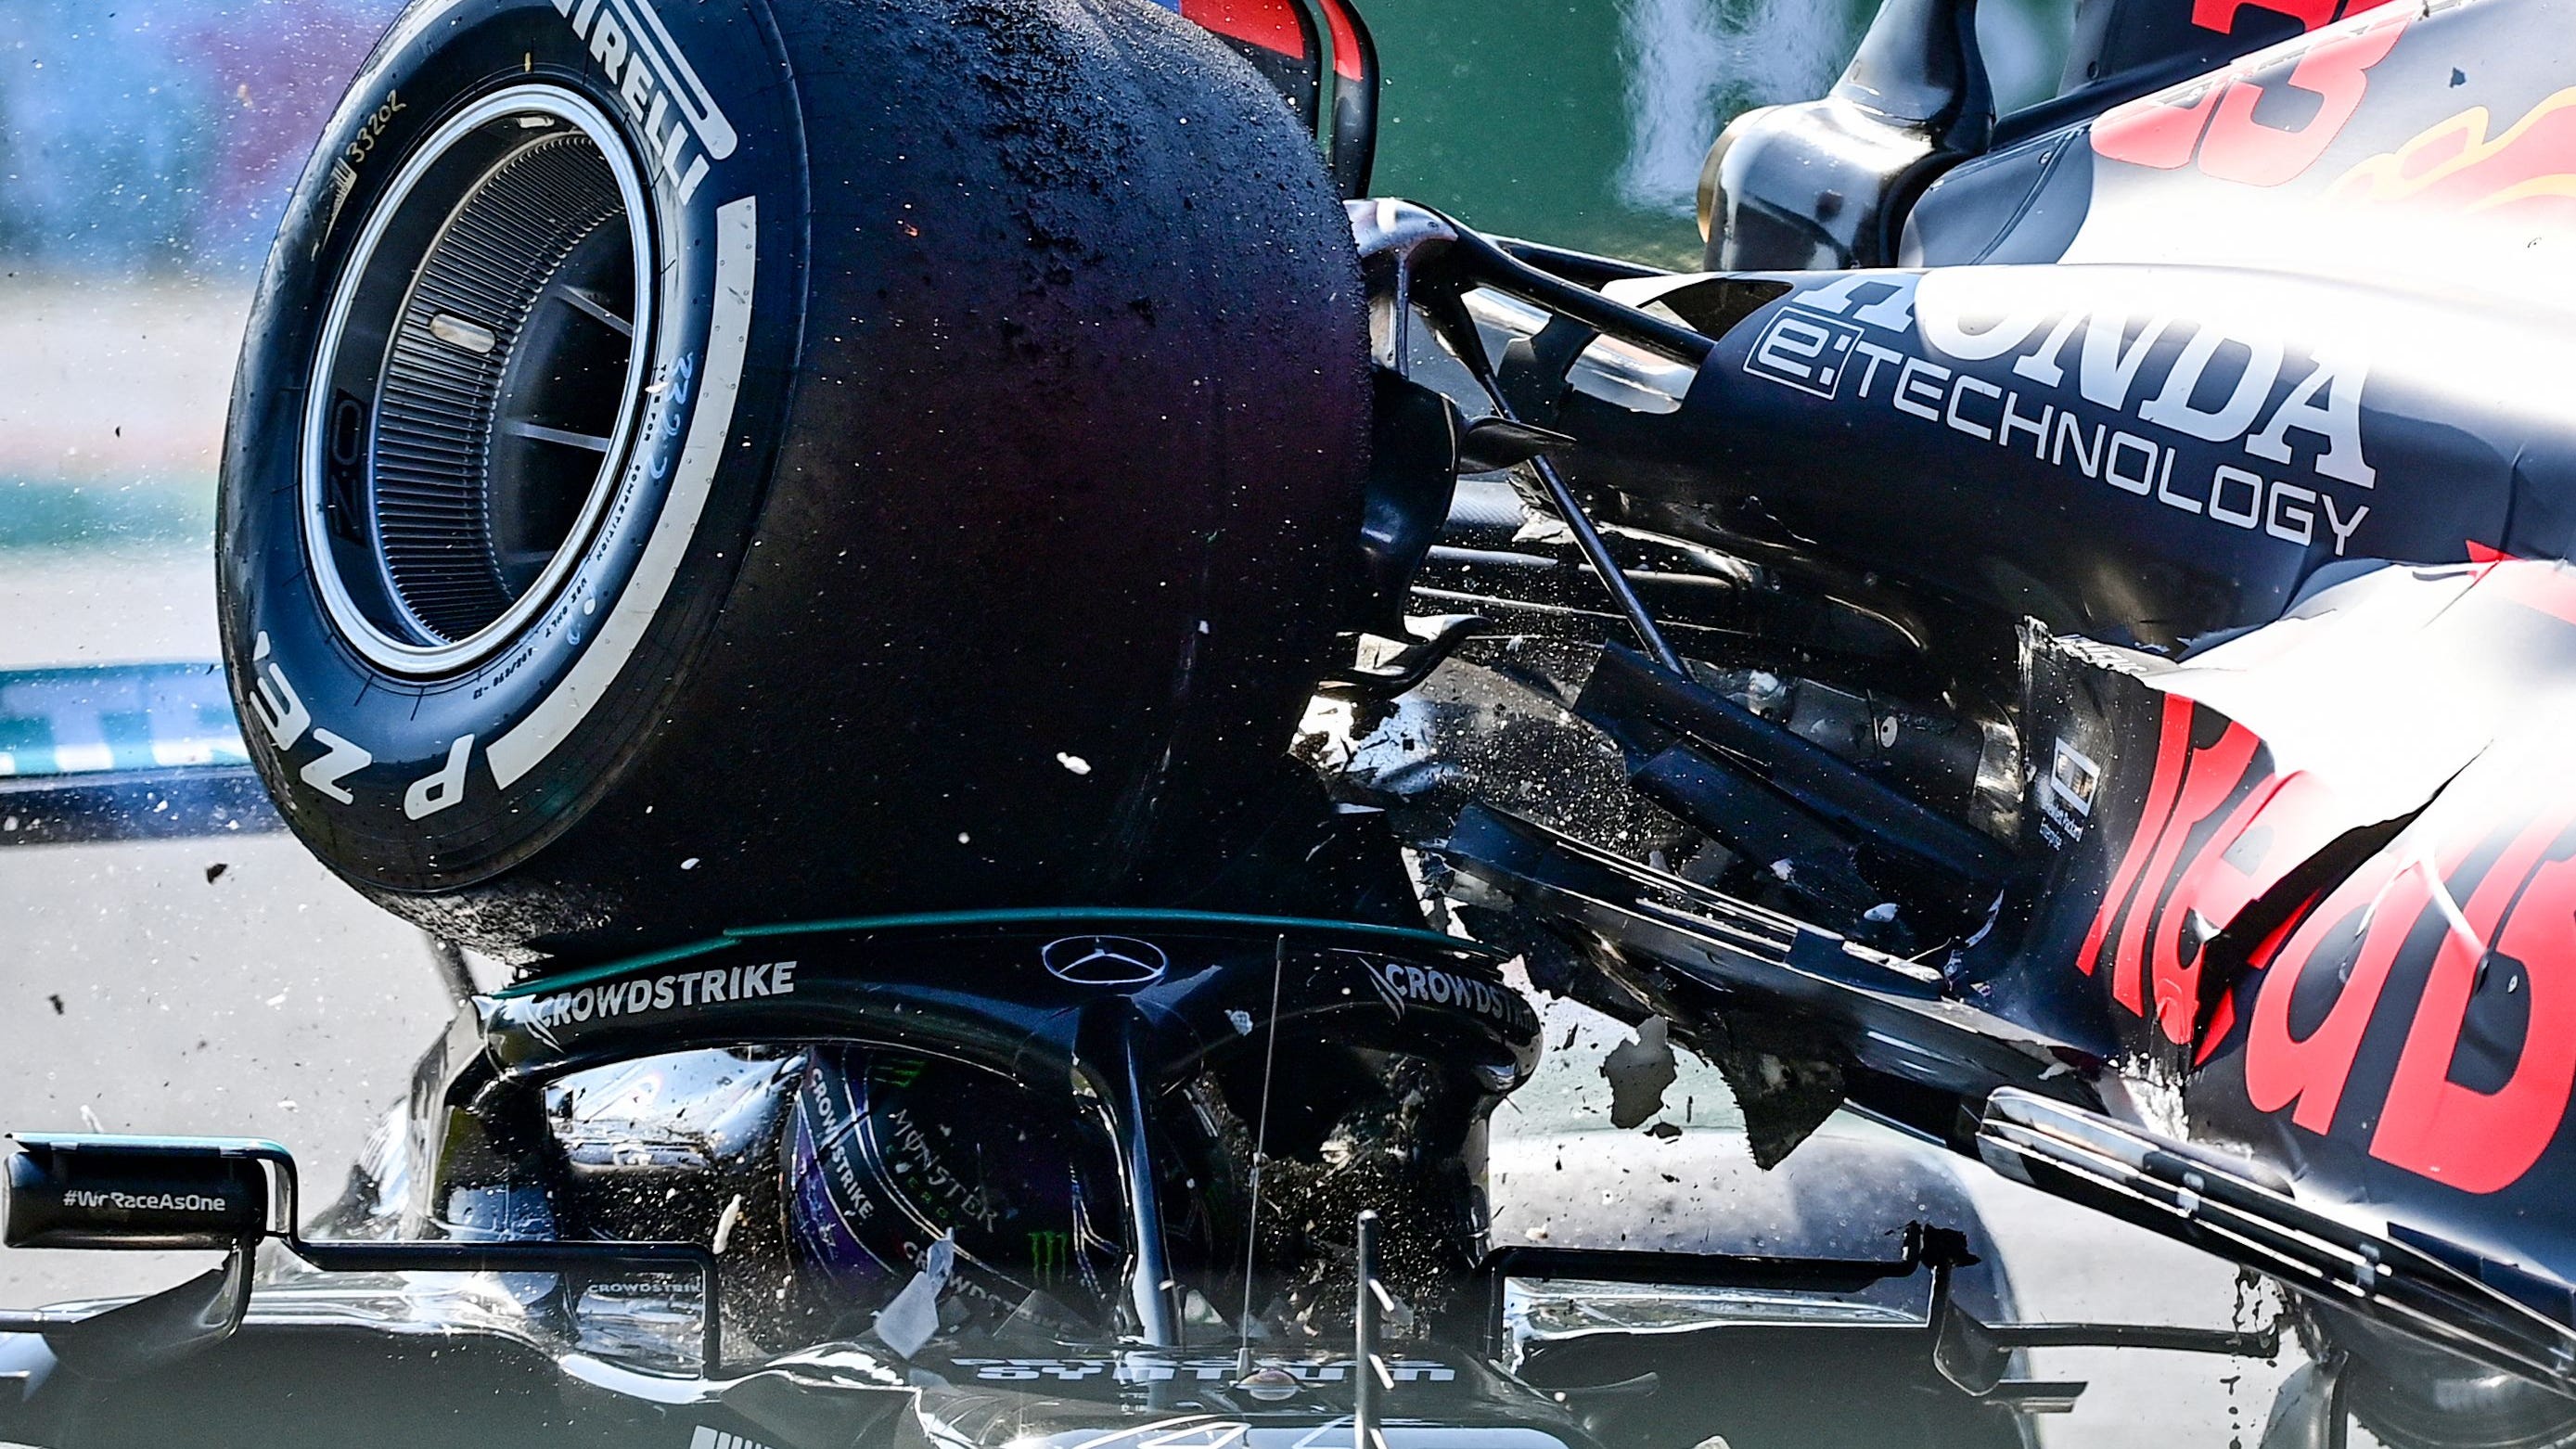 Lewis Hamilton, Max Verstappen crash at Formula 1Italian Grand Prix